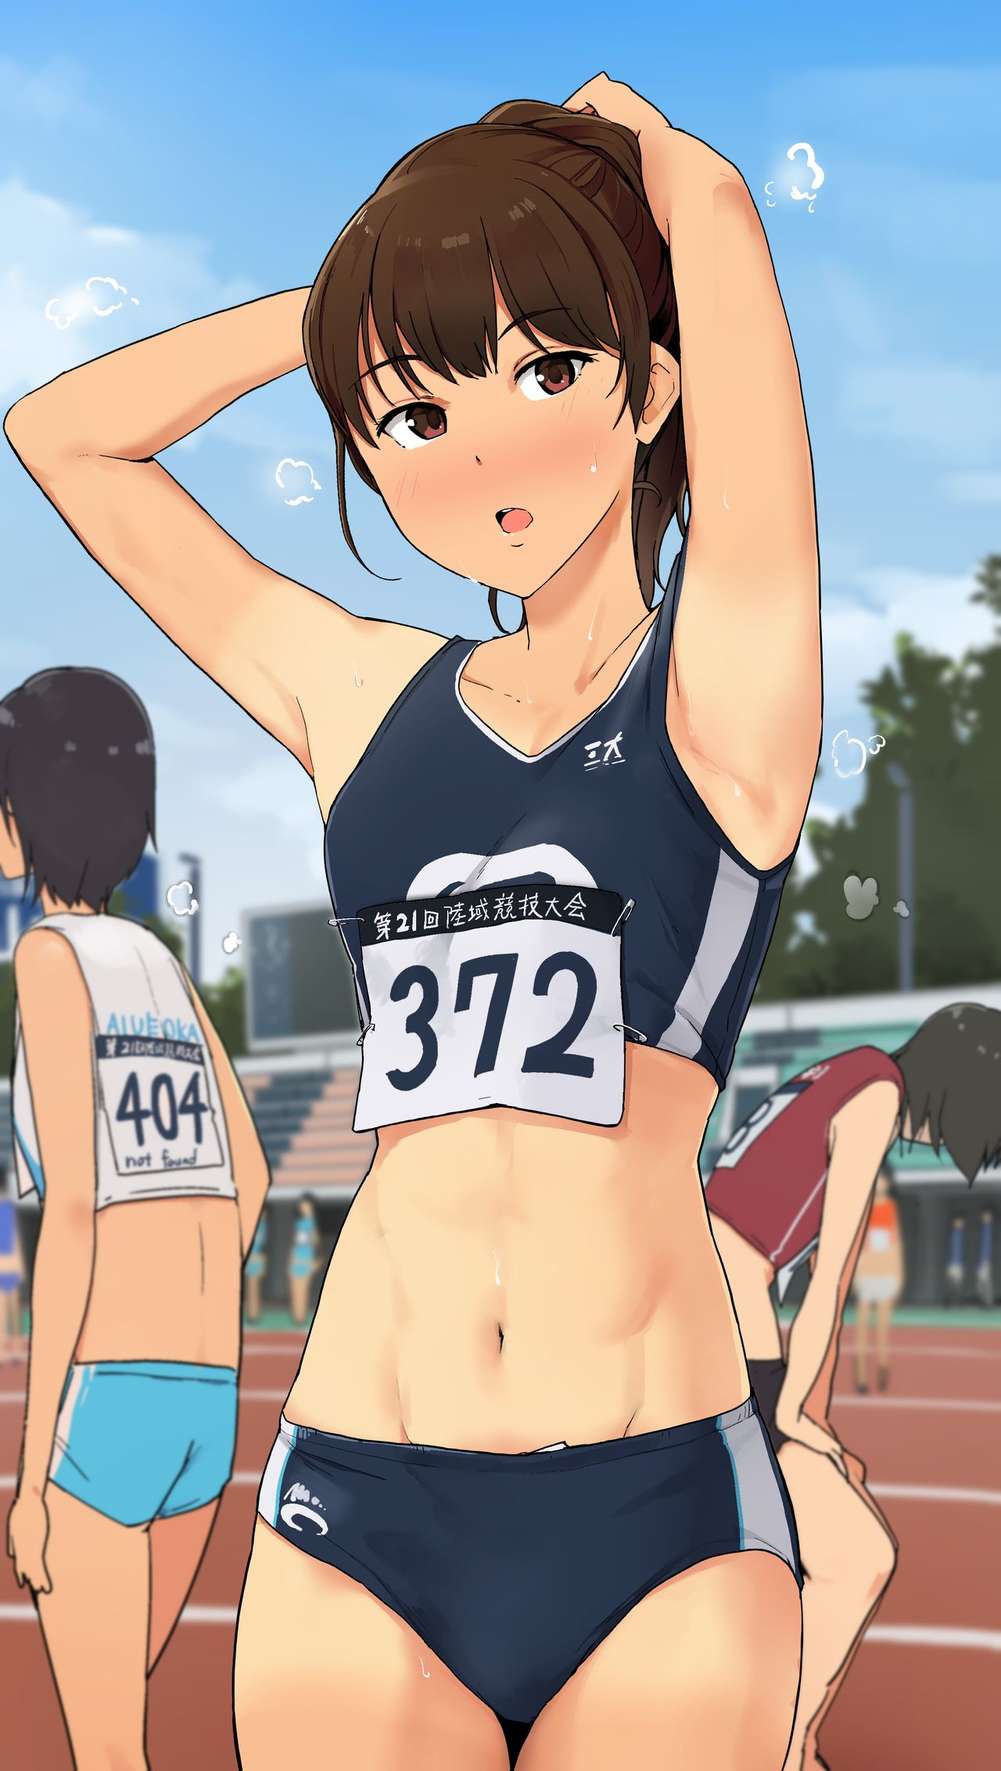 Anime girl athlete porn